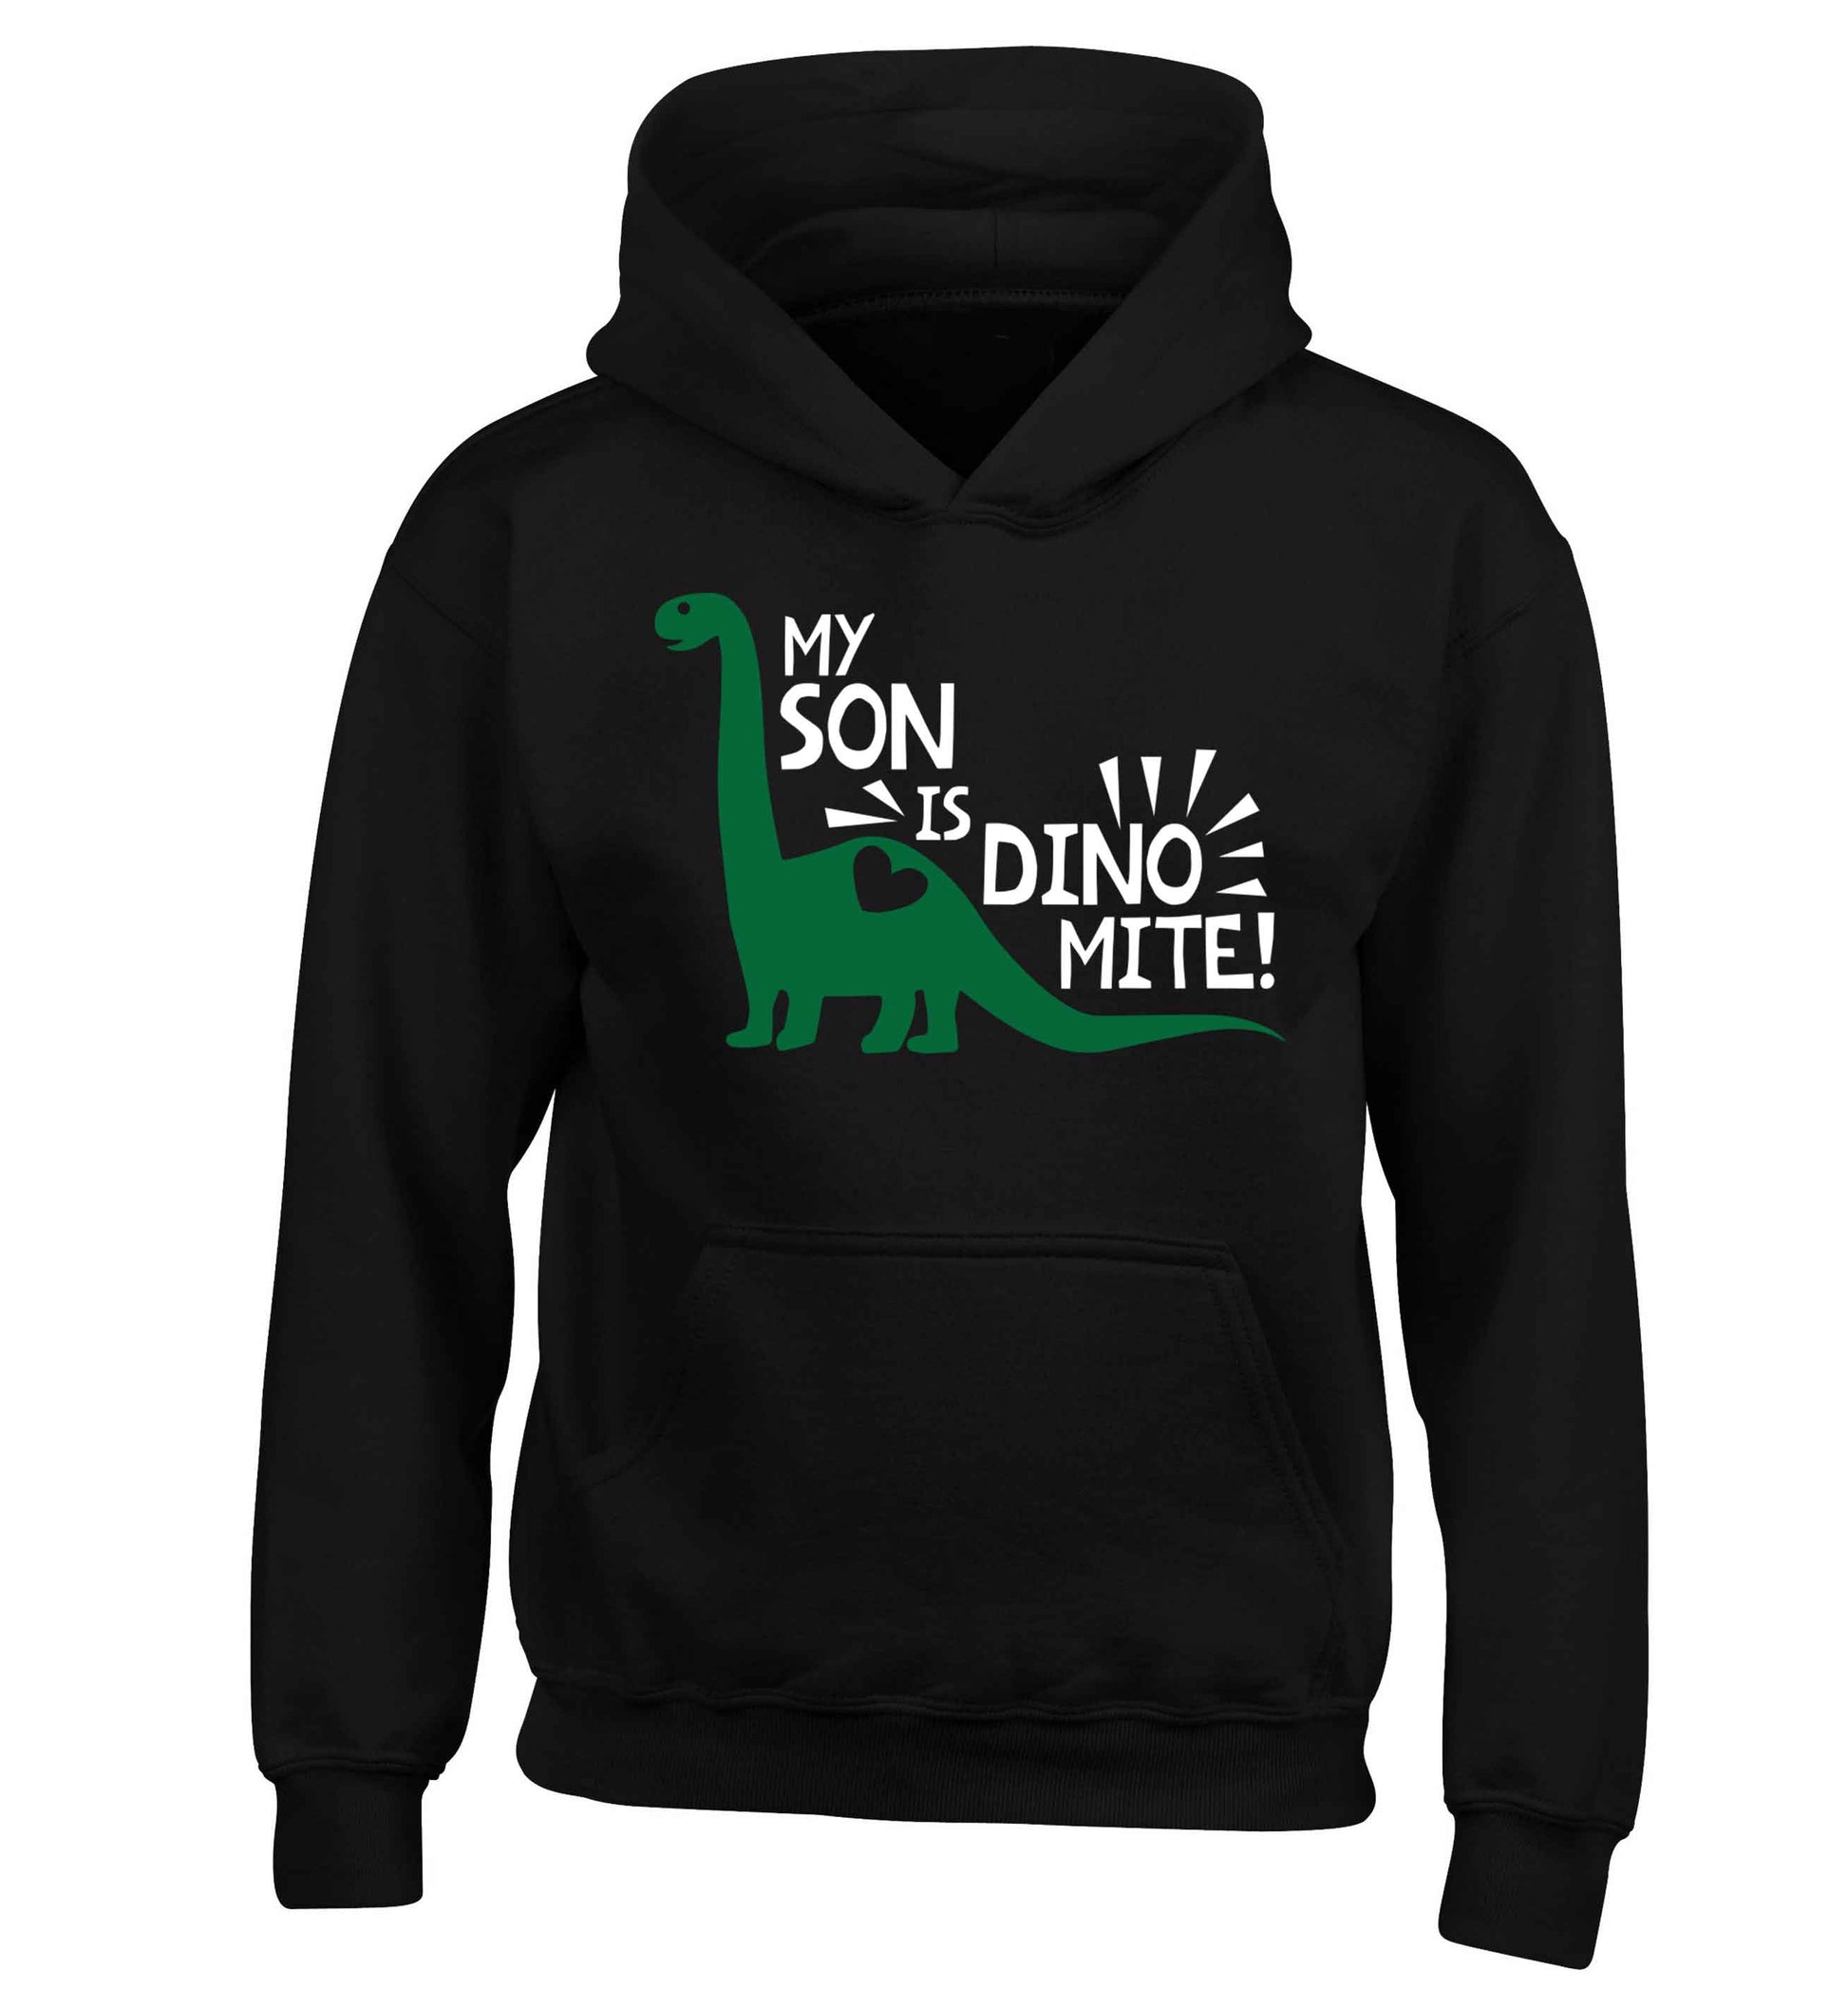 My son is dinomite! children's black hoodie 12-13 Years